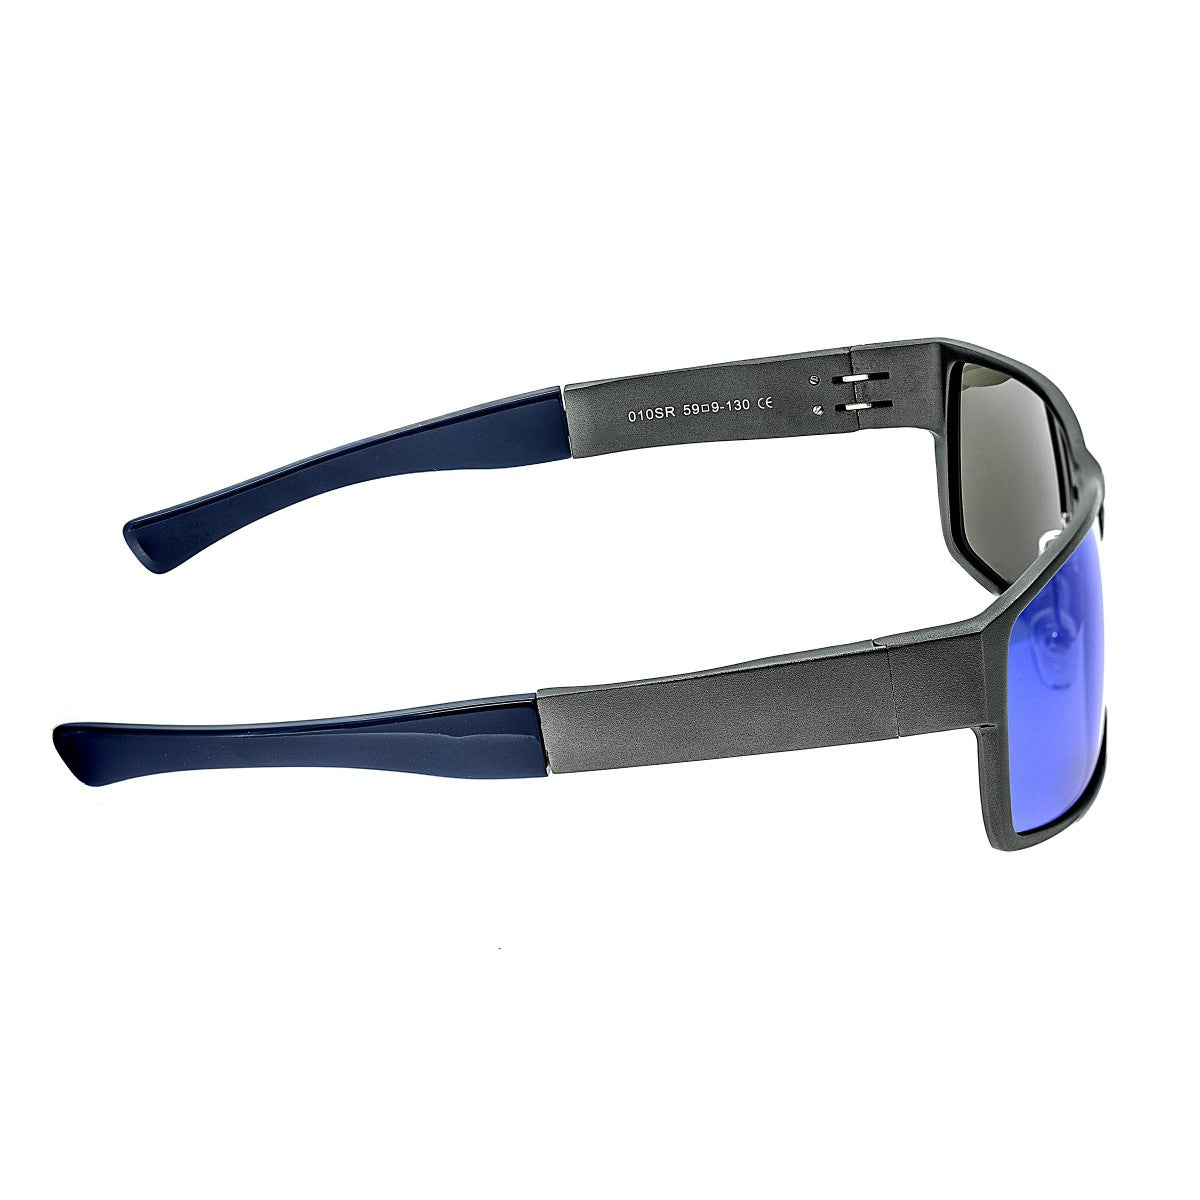 Breed Stratus Aluminium Polarized Sunglasses - Gunmetal/Green - BSG010SR